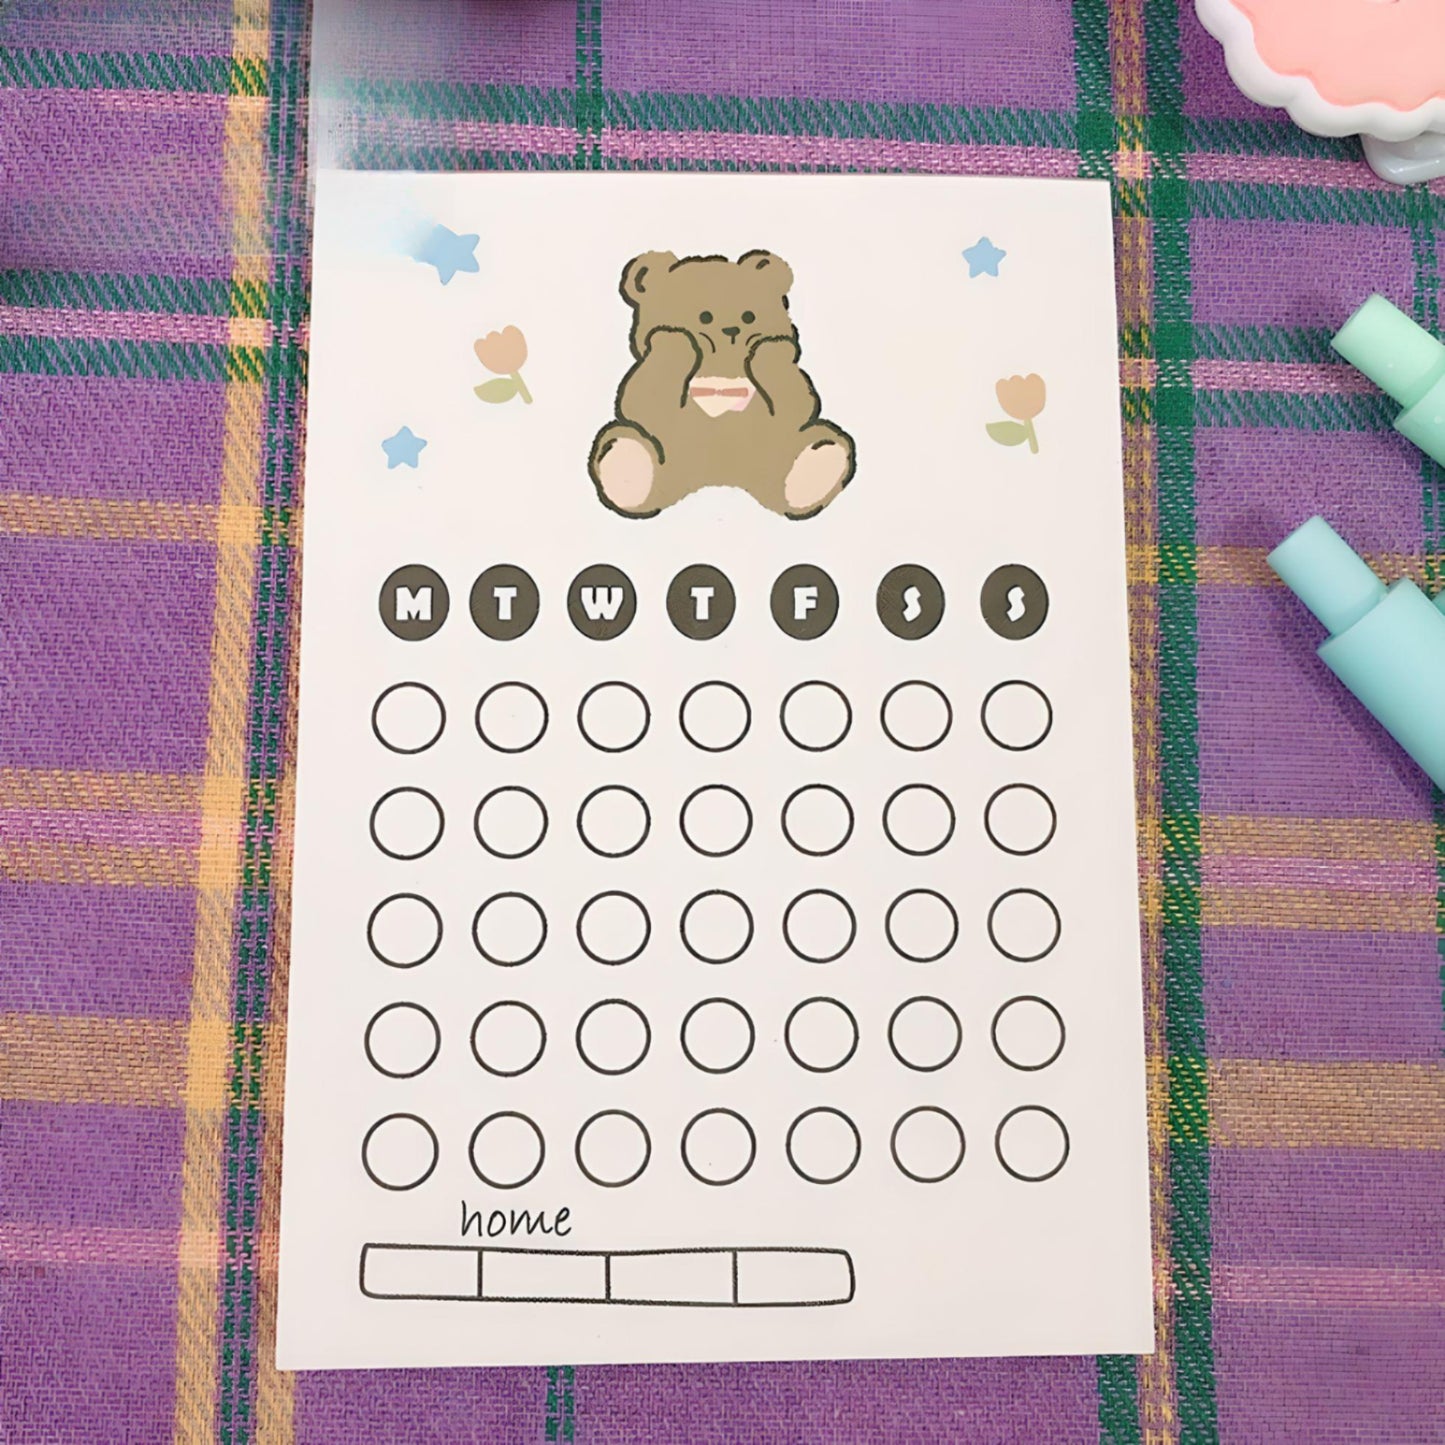 Kawaii bear sticky notes on a purple tablecloth